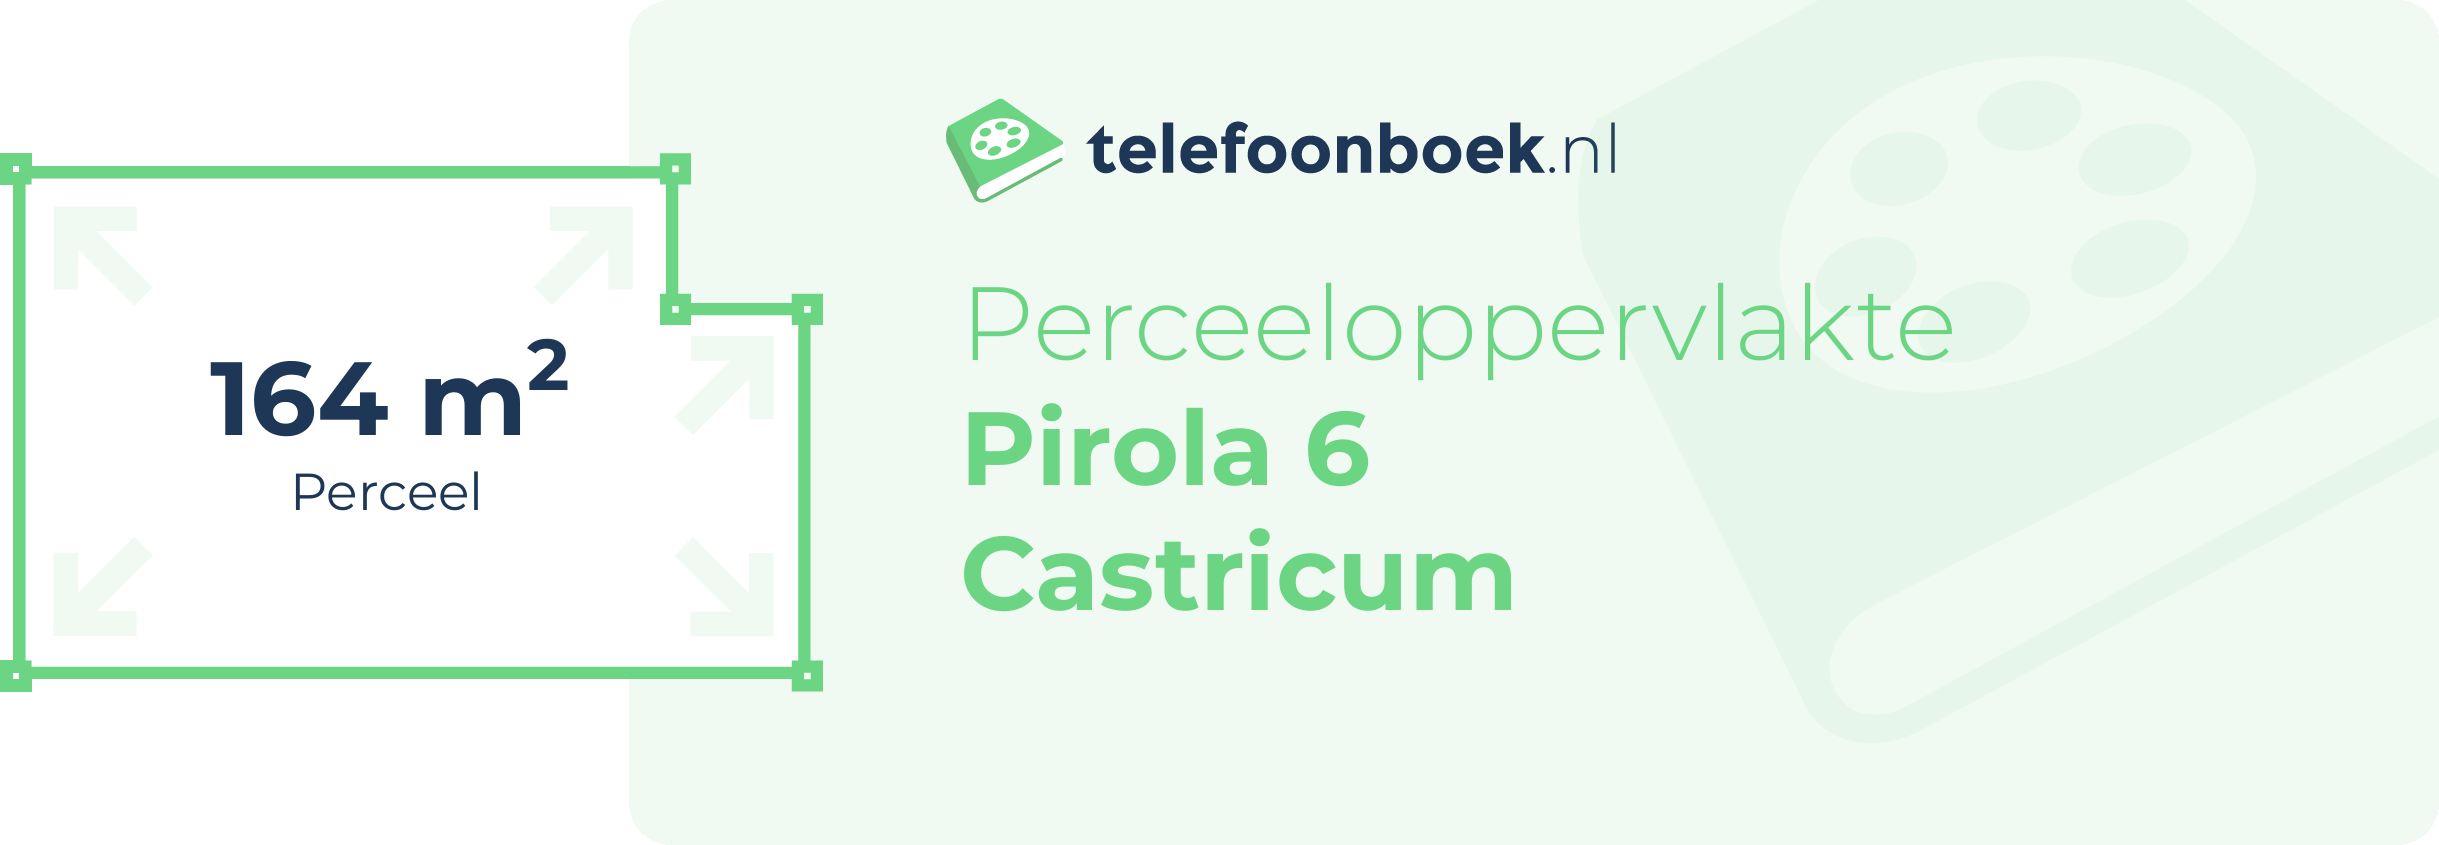 Perceeloppervlakte Pirola 6 Castricum